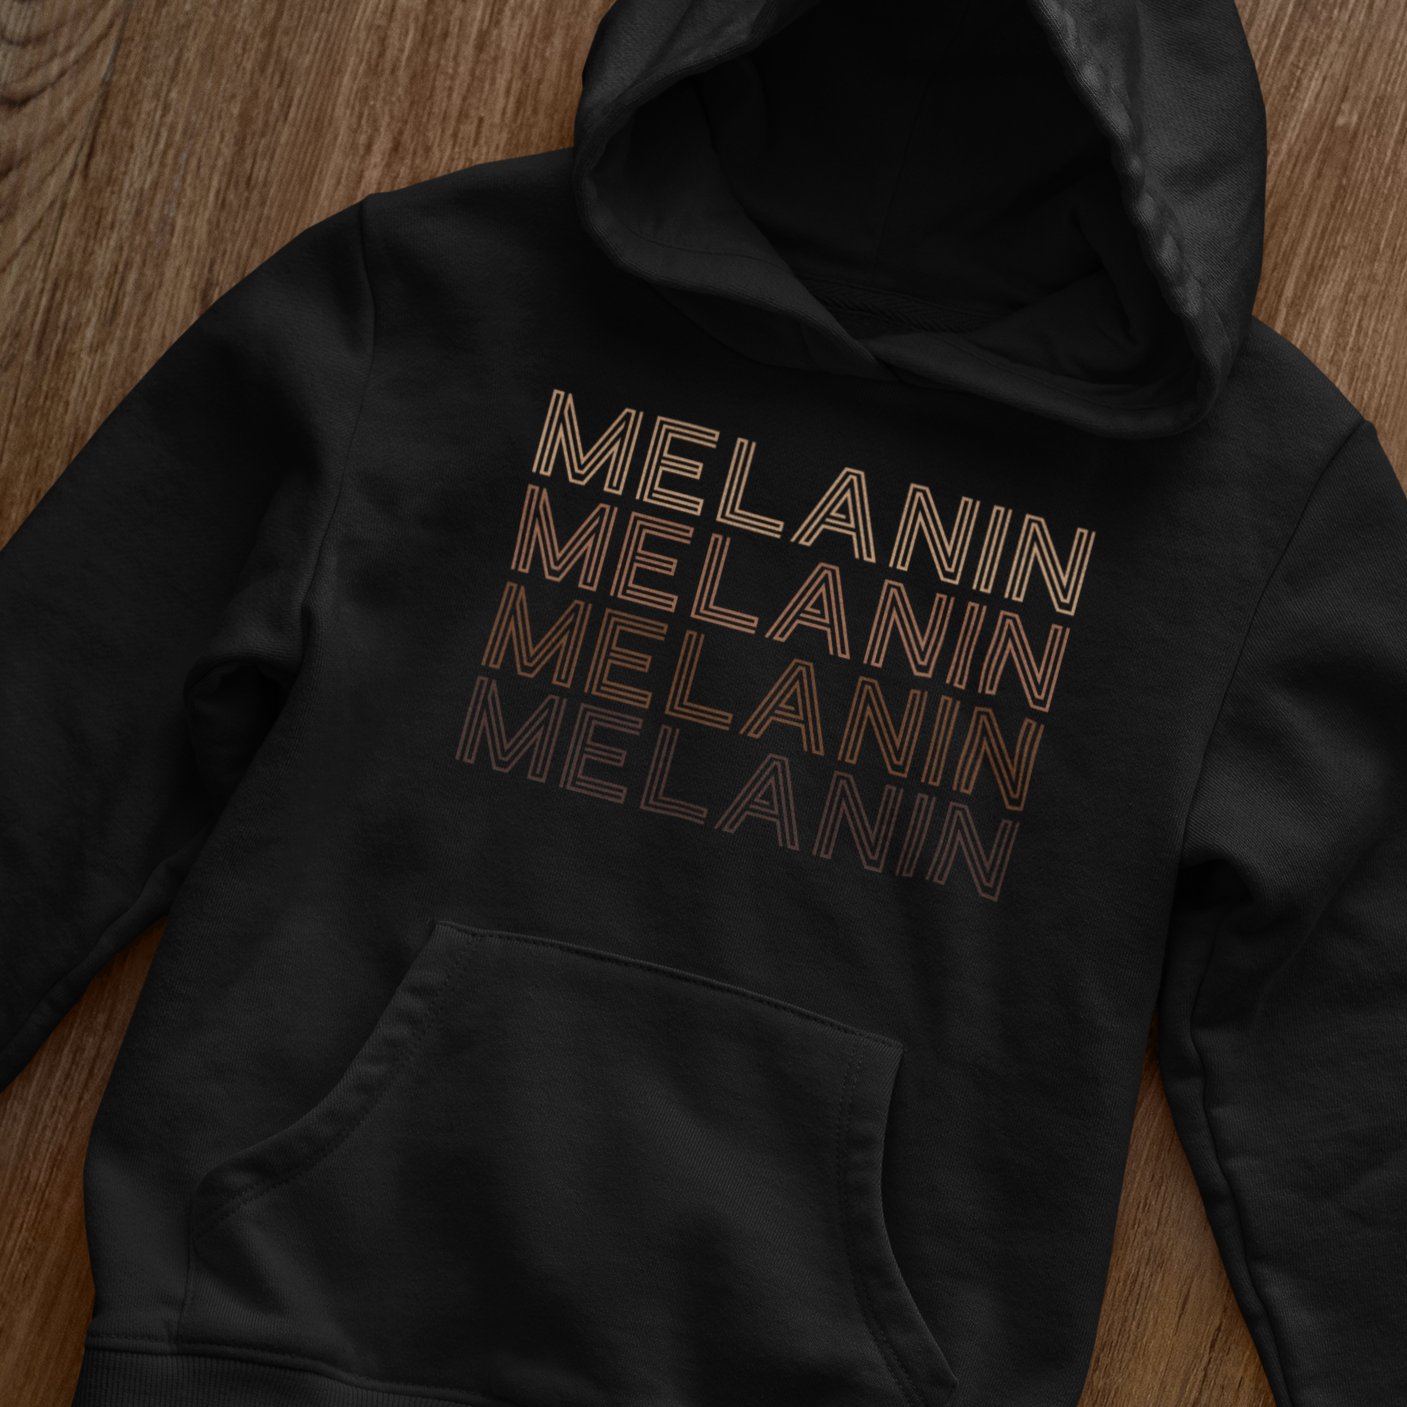 Melanin Tshirt, sweatshirt, hoodie, black history shirt, black history month shirts - Wilson Design Group